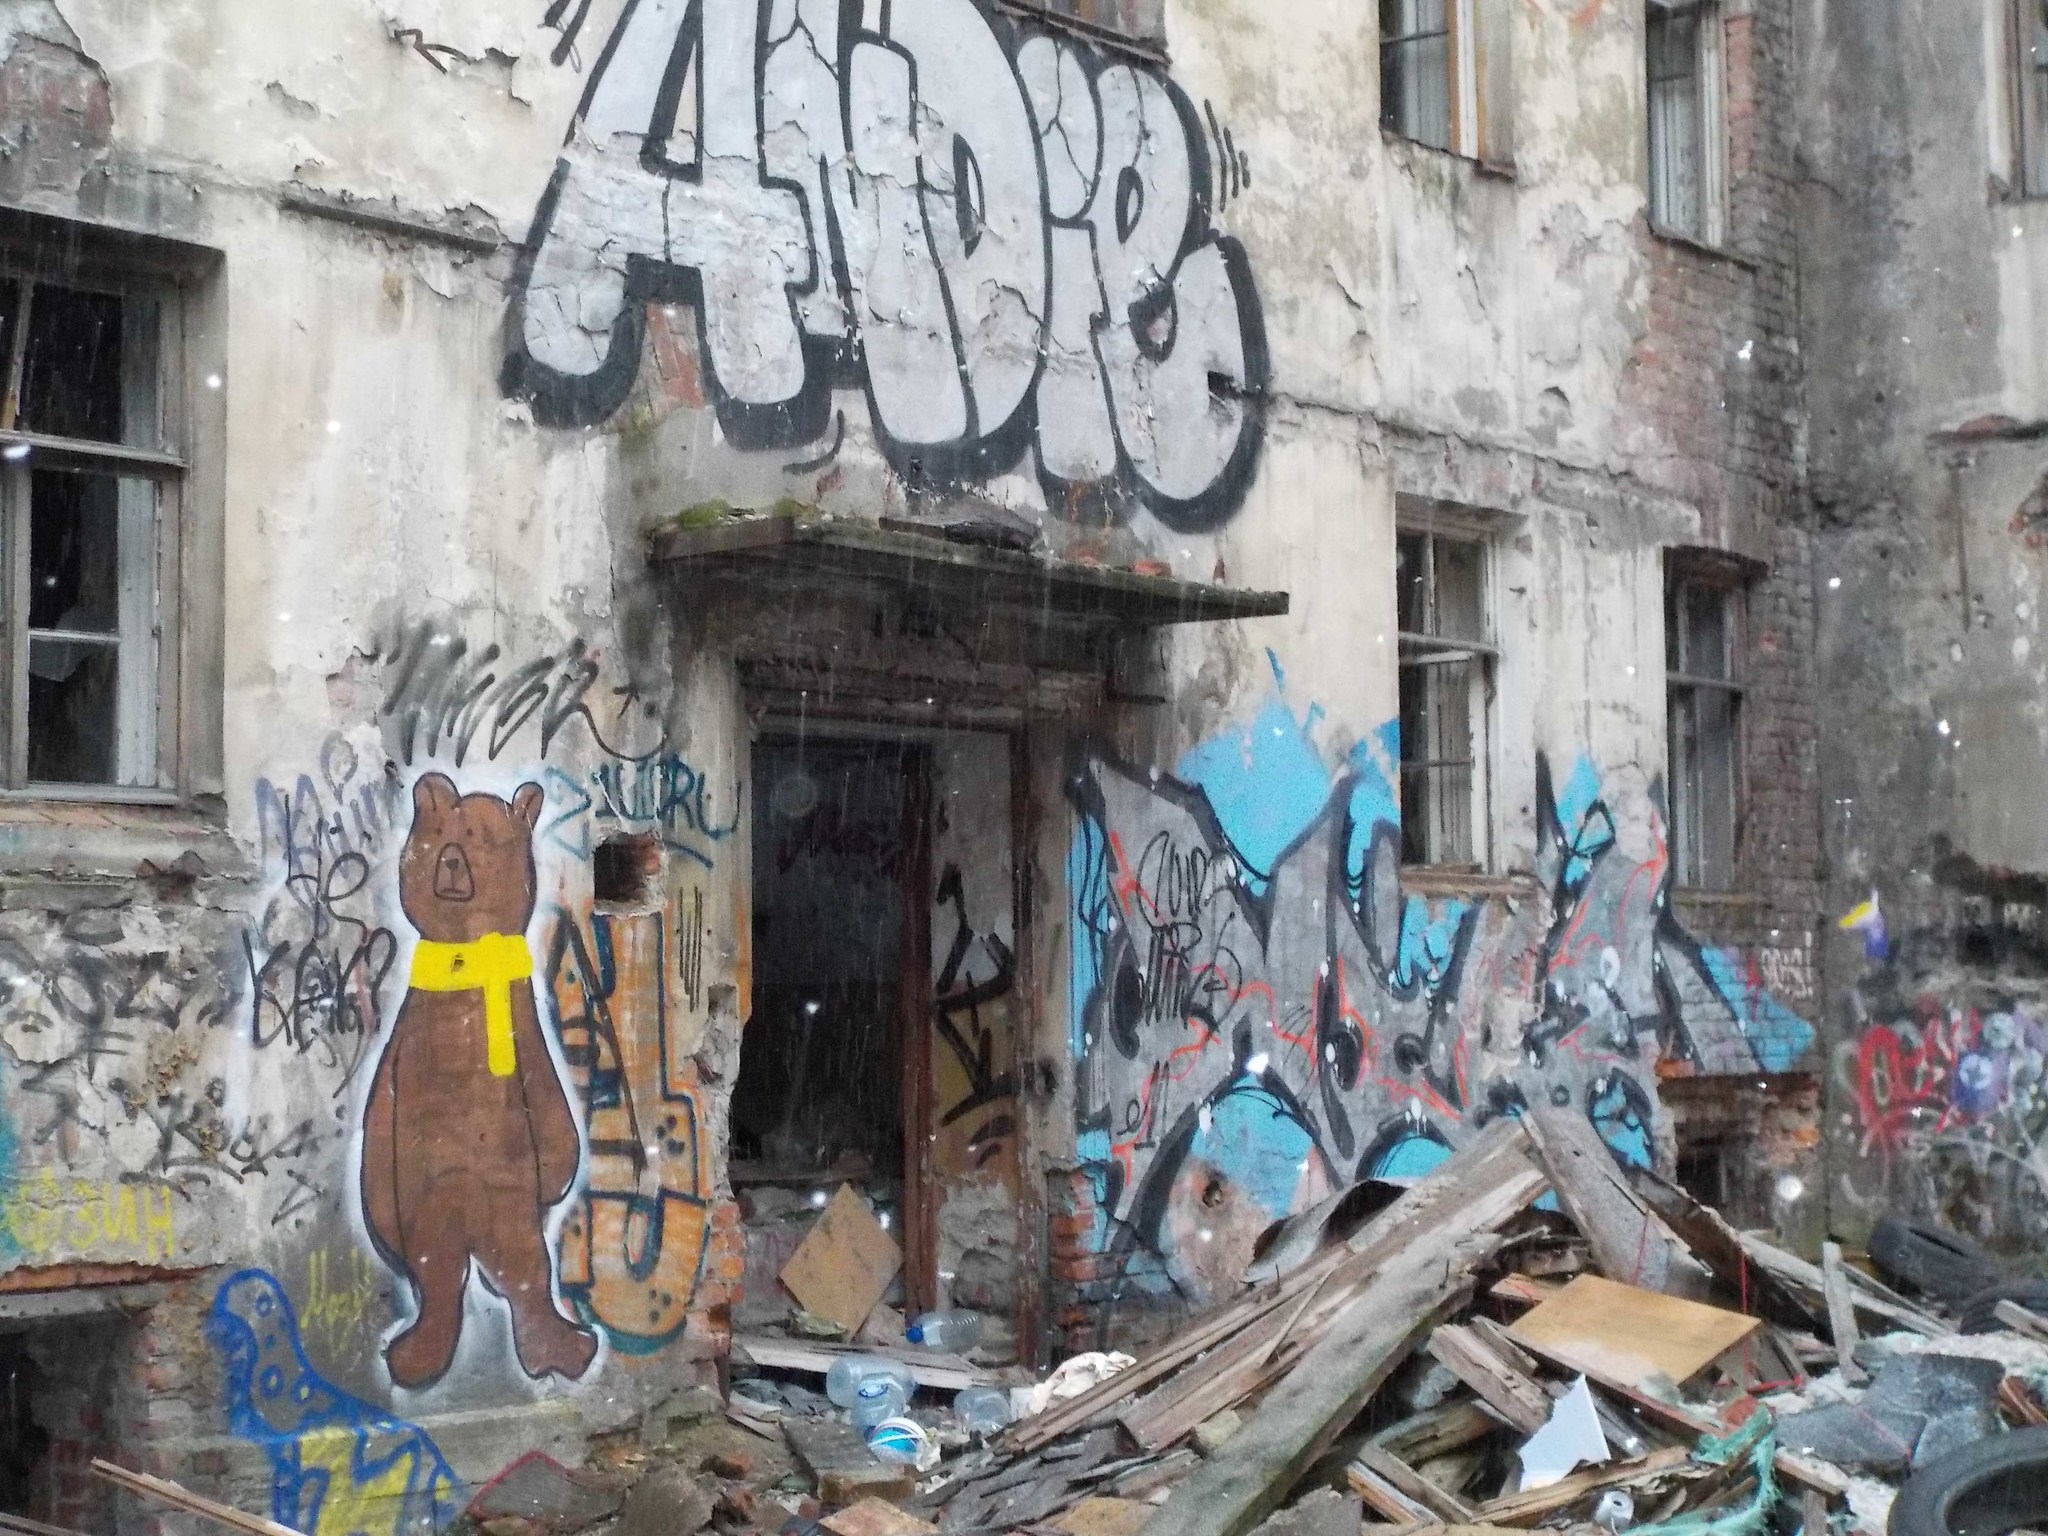 Graffiti of St. Petersburg gateways - My, Graffiti, Street performers, Saint Petersburg, Excursion, Urbanphoto, Urbanturism, Urbantrip, Longpost